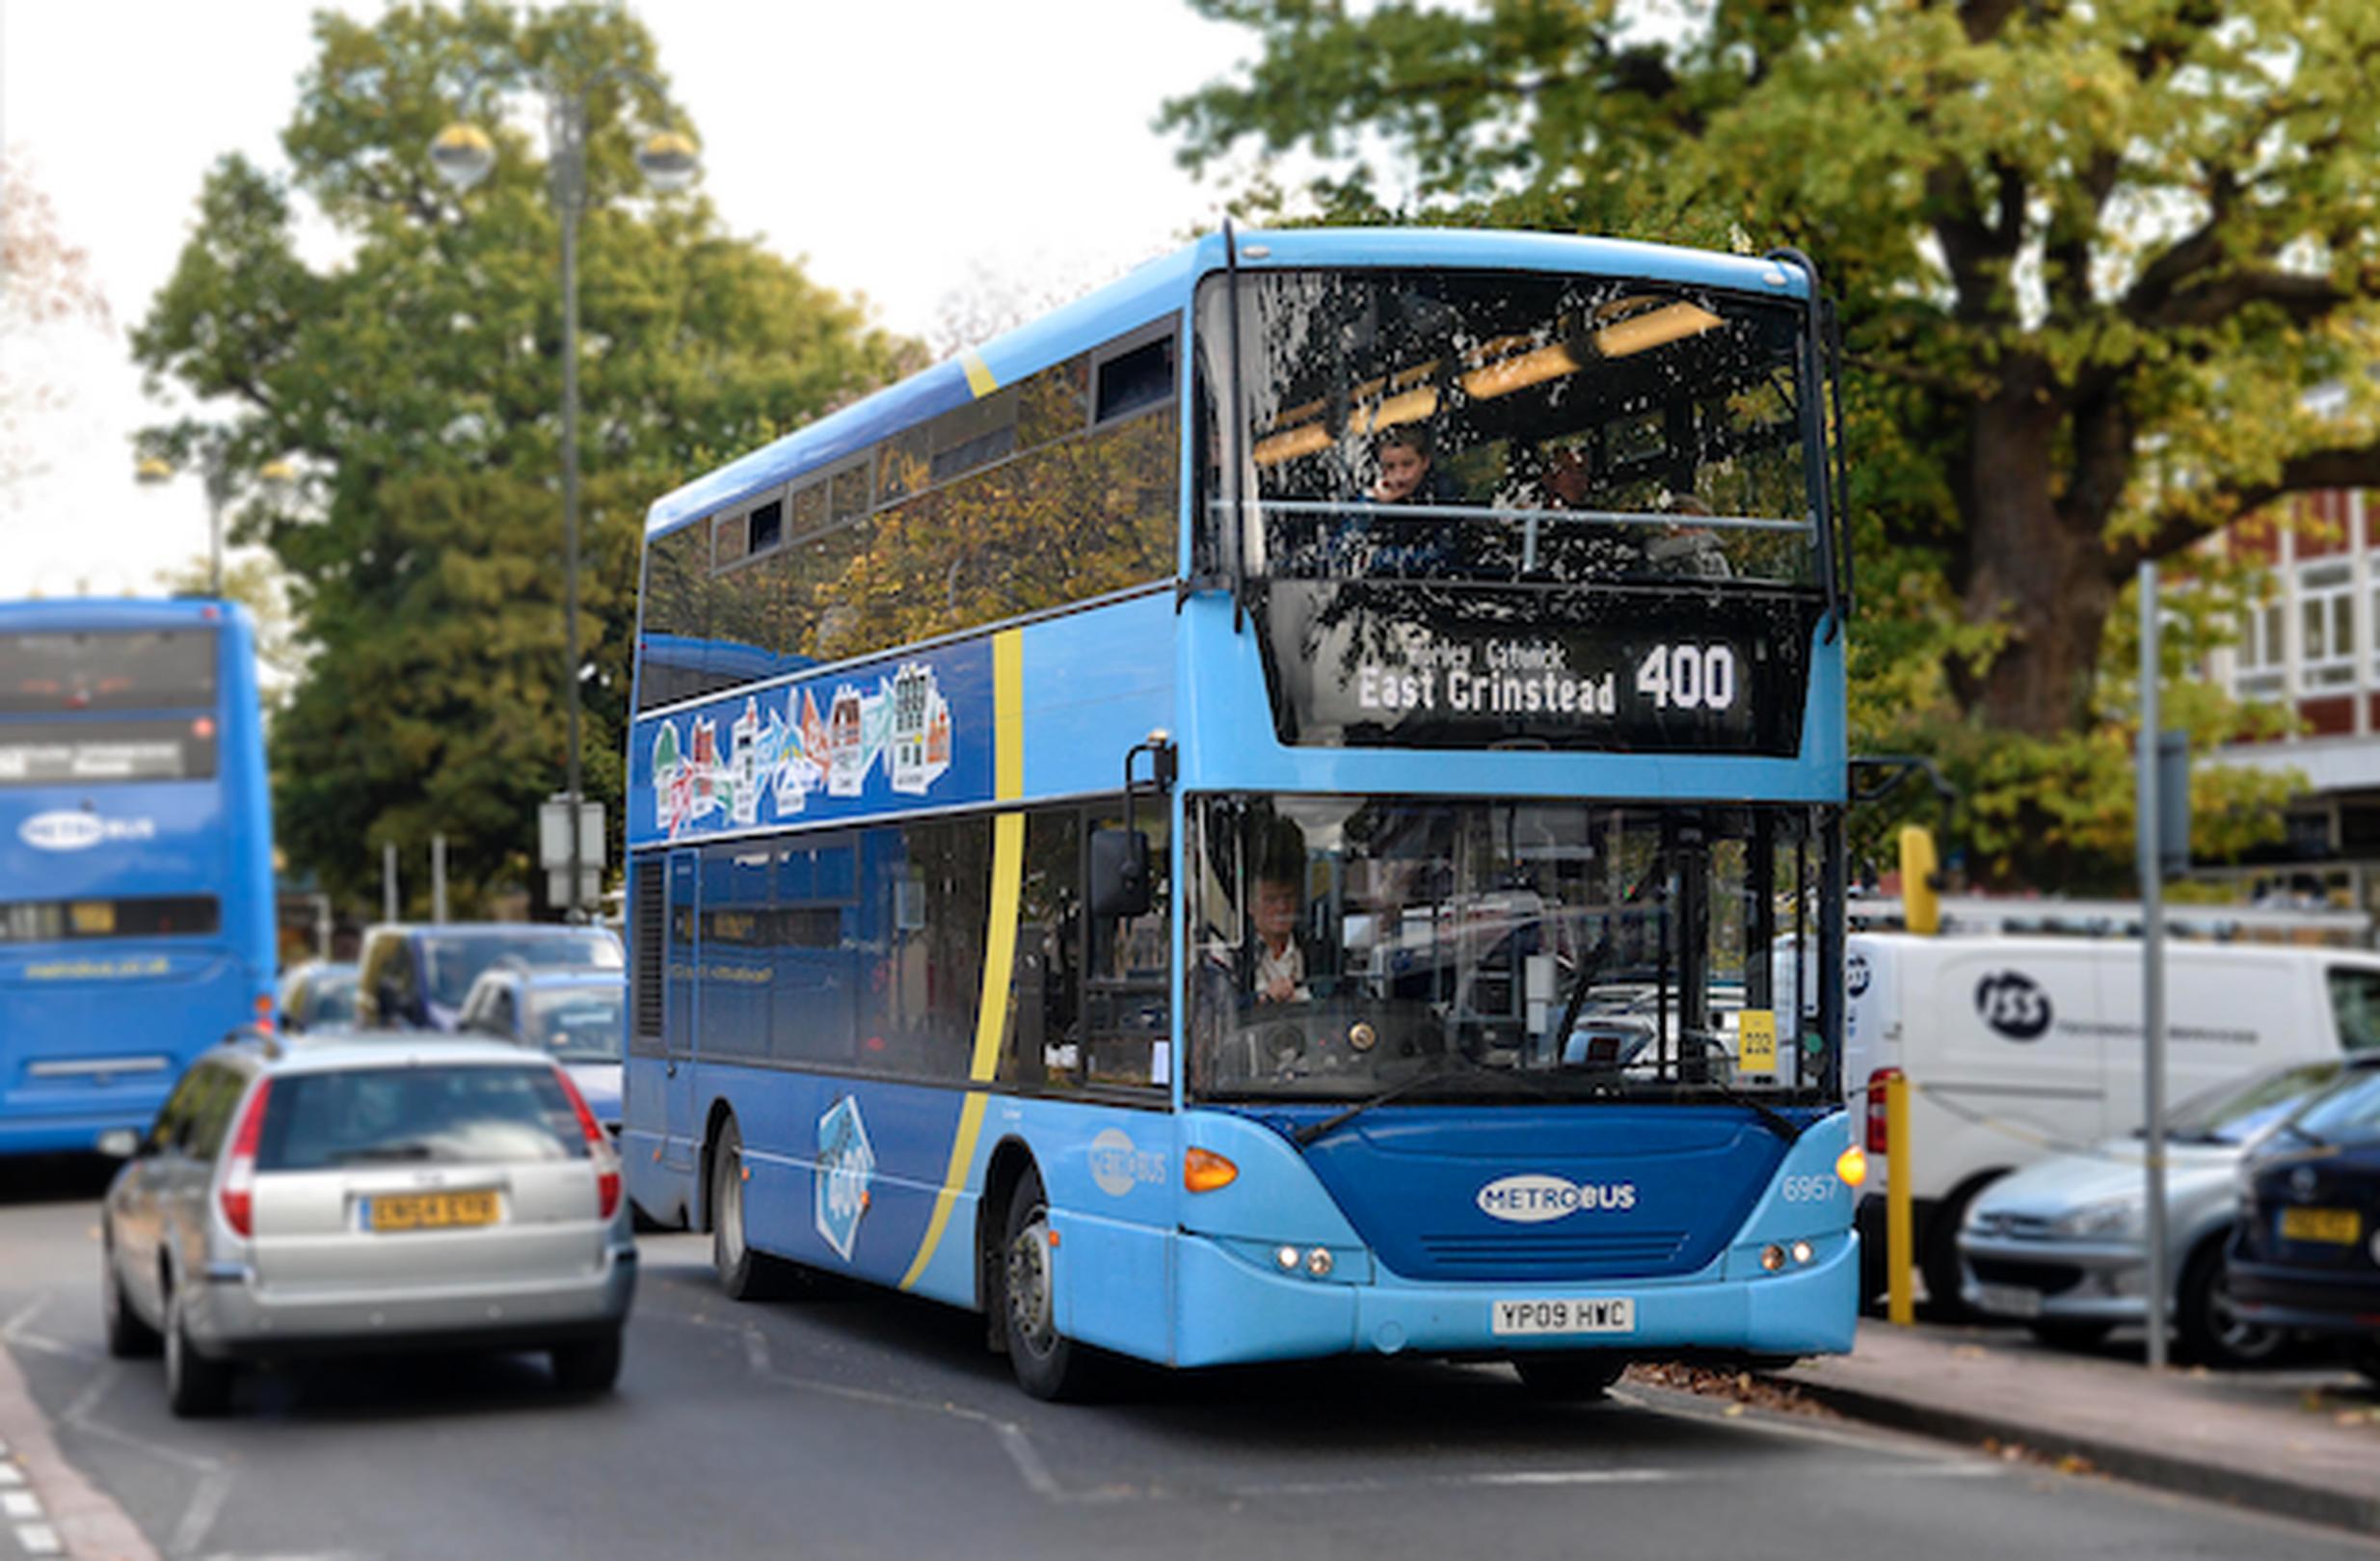 A Metrobus service